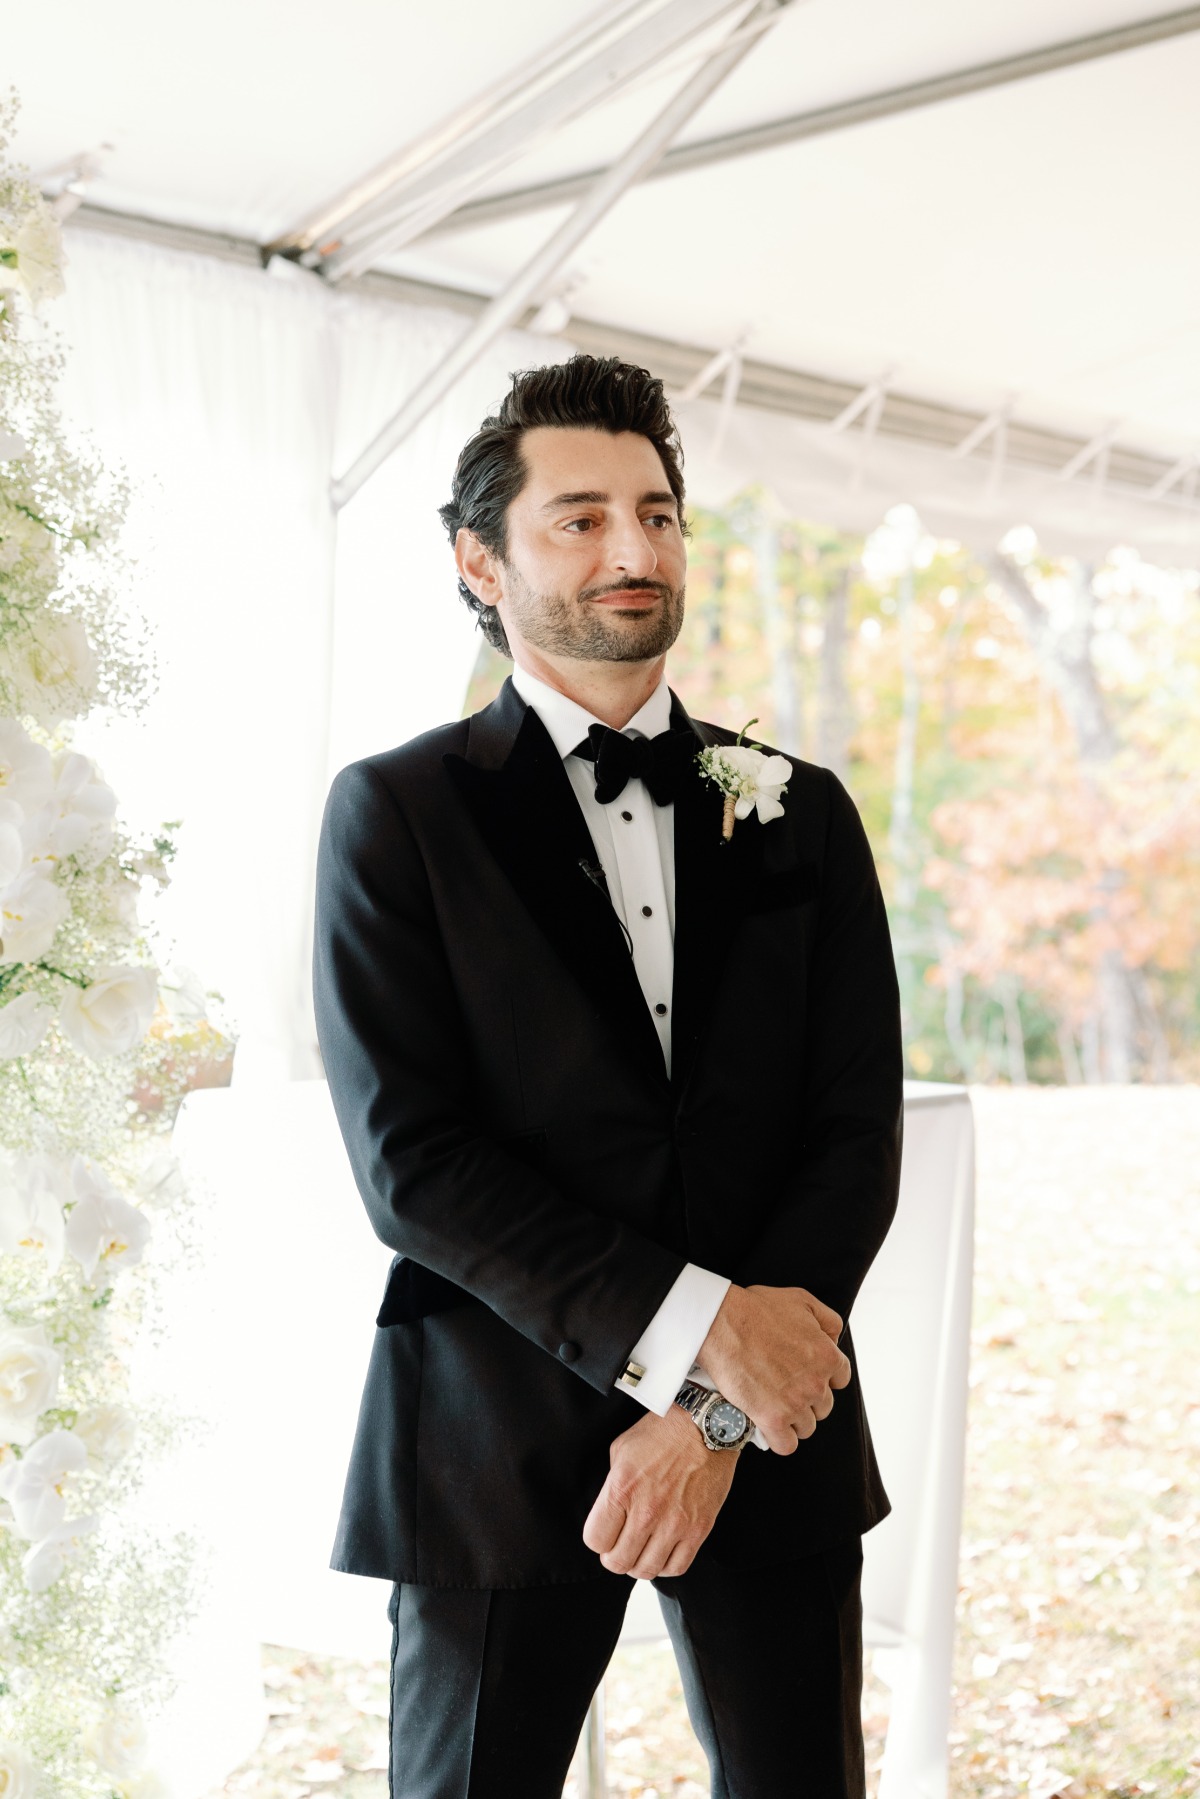 Dapper groom in custom tuxedo waiting for bride to walk aisle